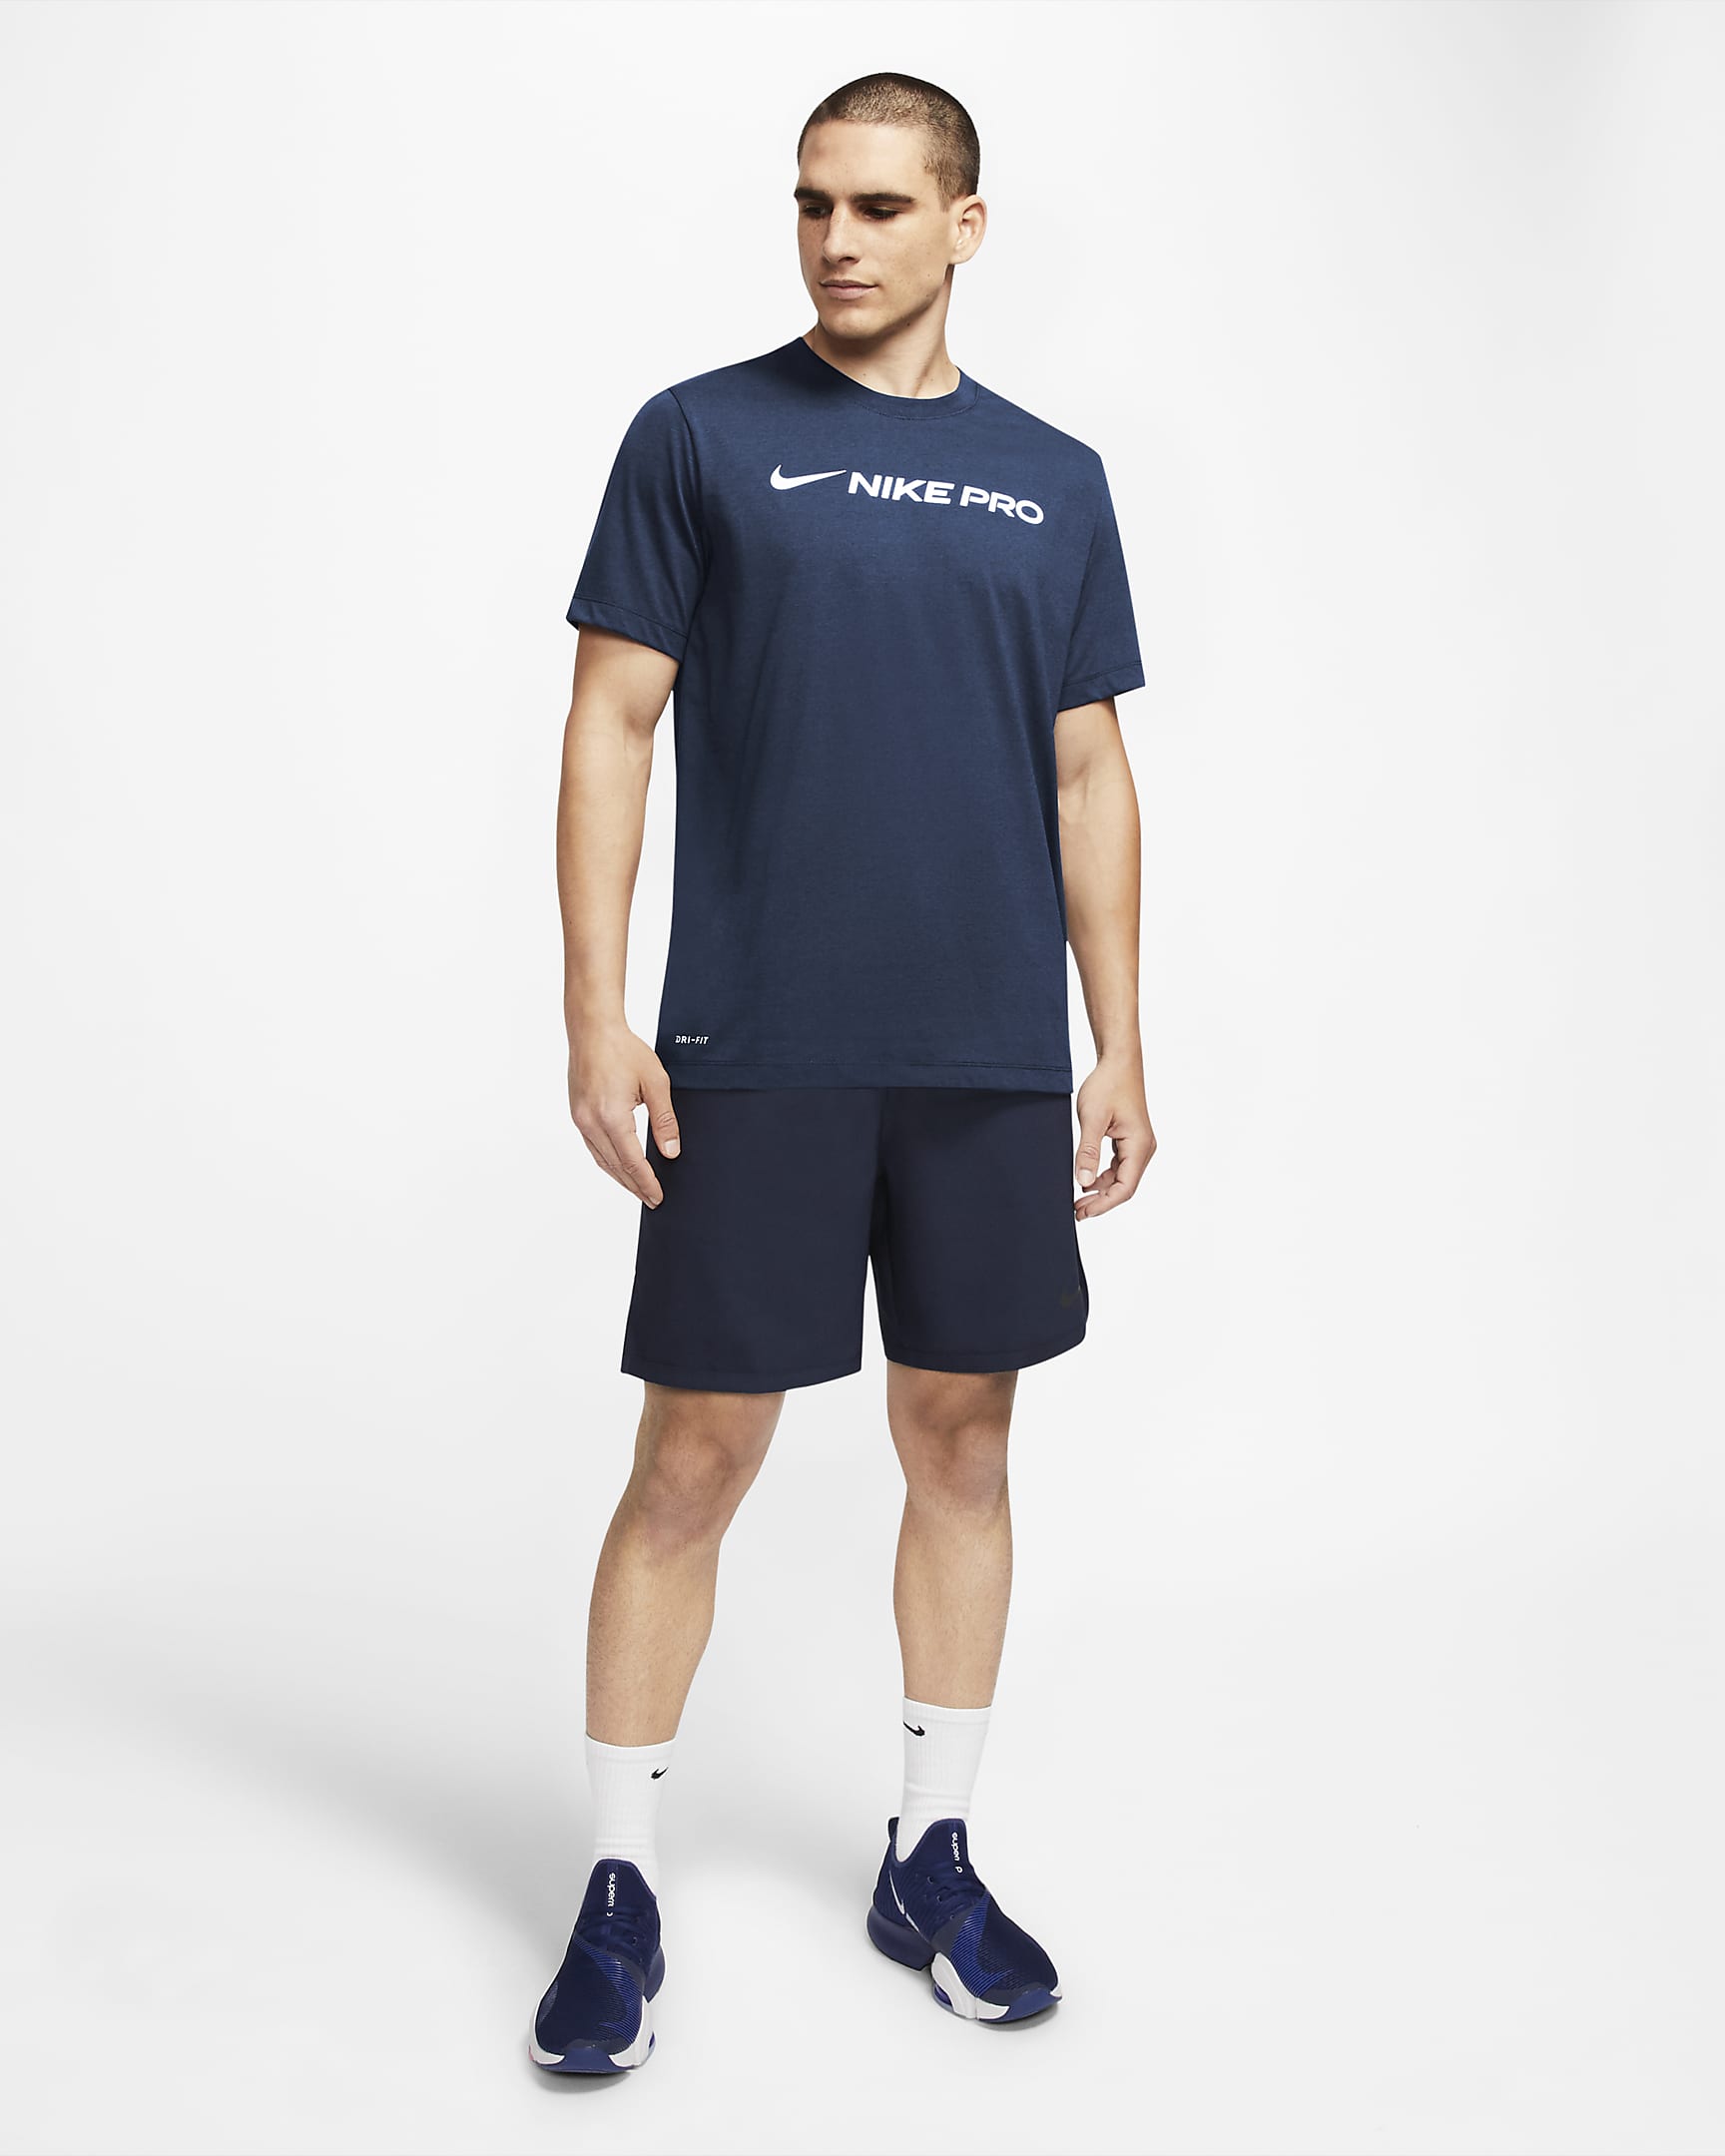 Nike Dri-FIT Men's Training T-Shirt - Mystic Navy